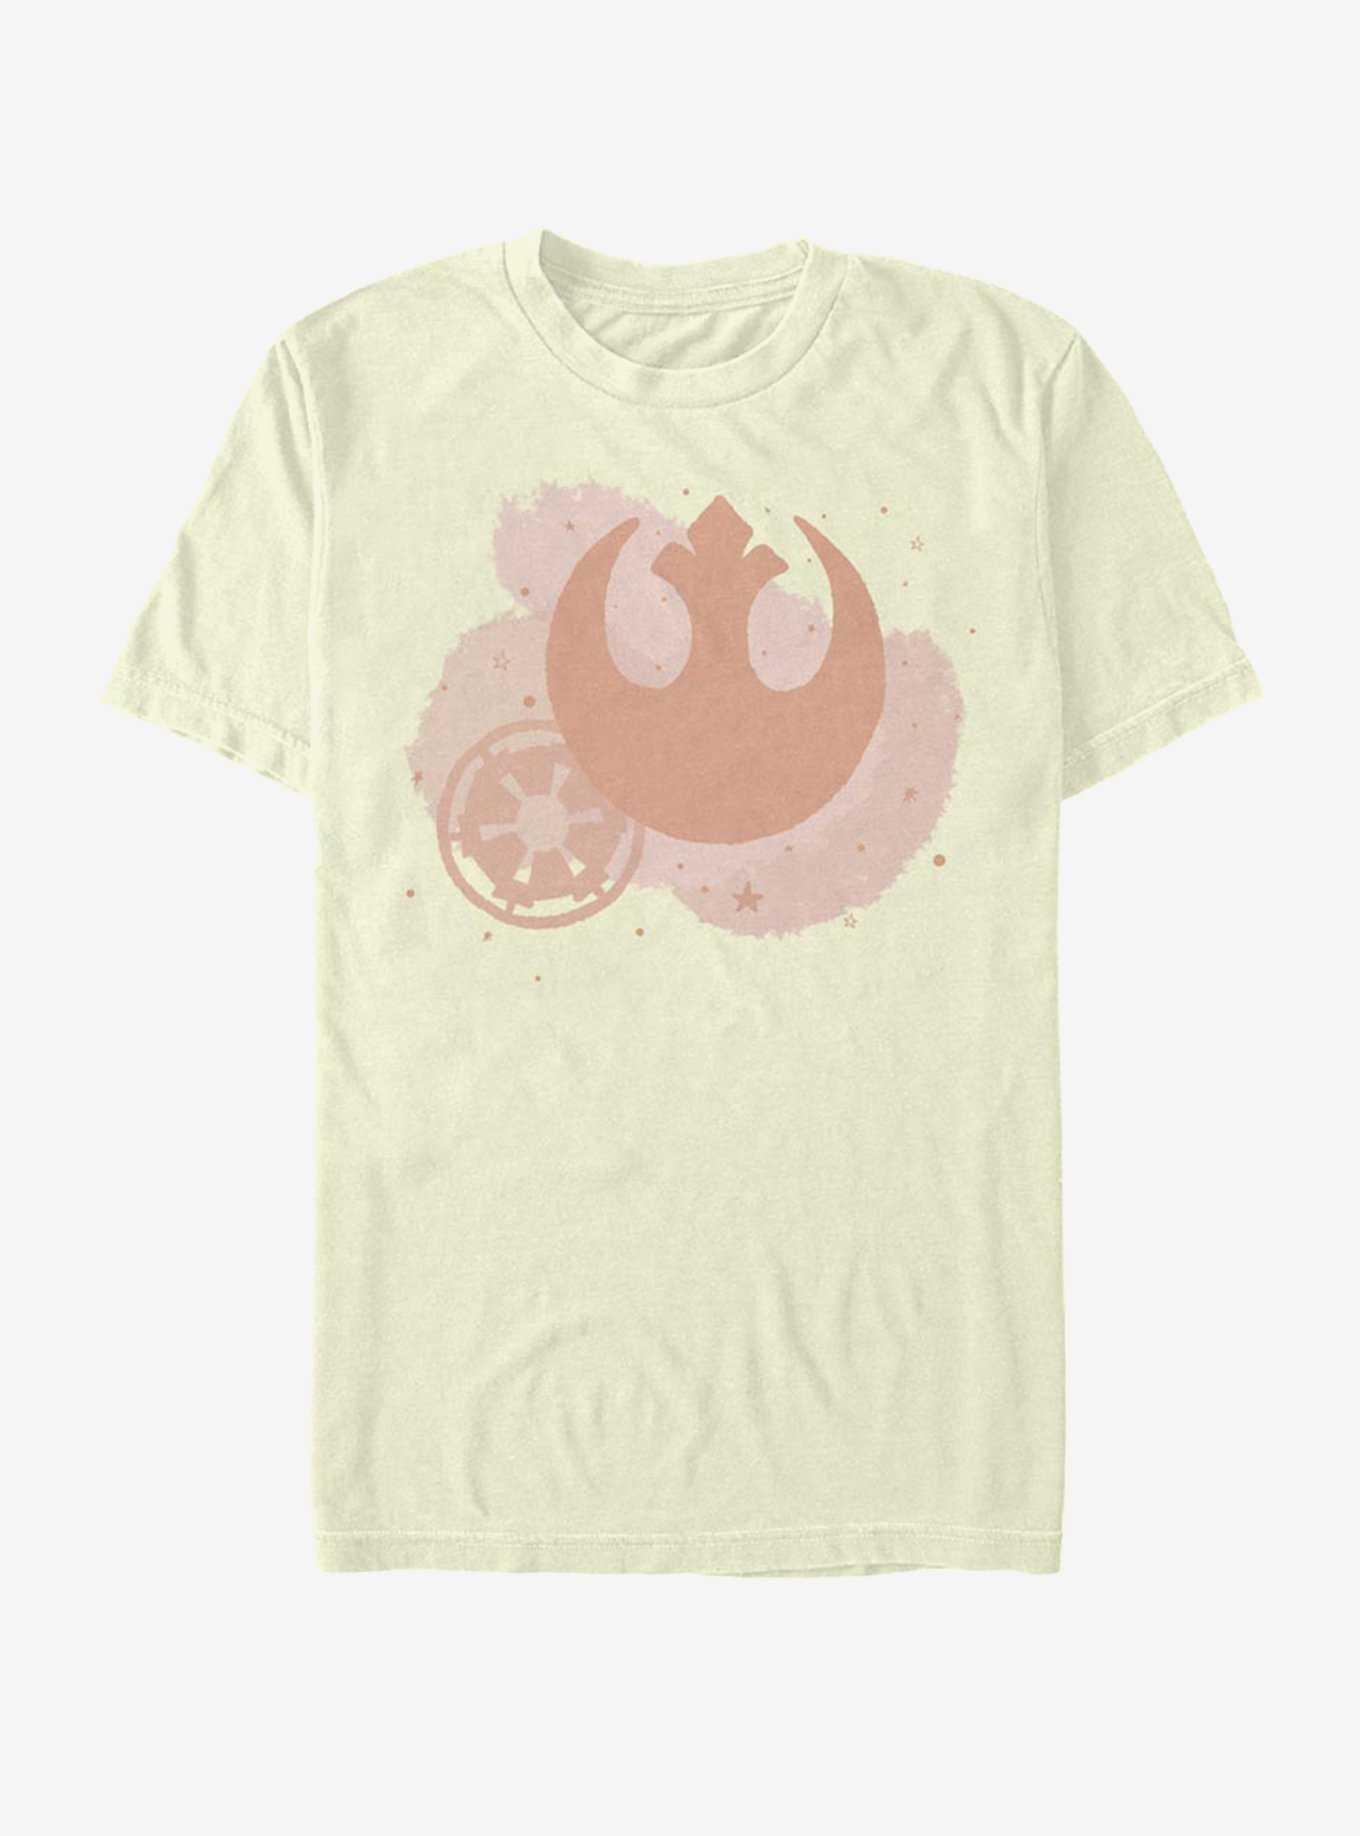 Star Wars Minimal Brush Logos T-Shirt, , hi-res